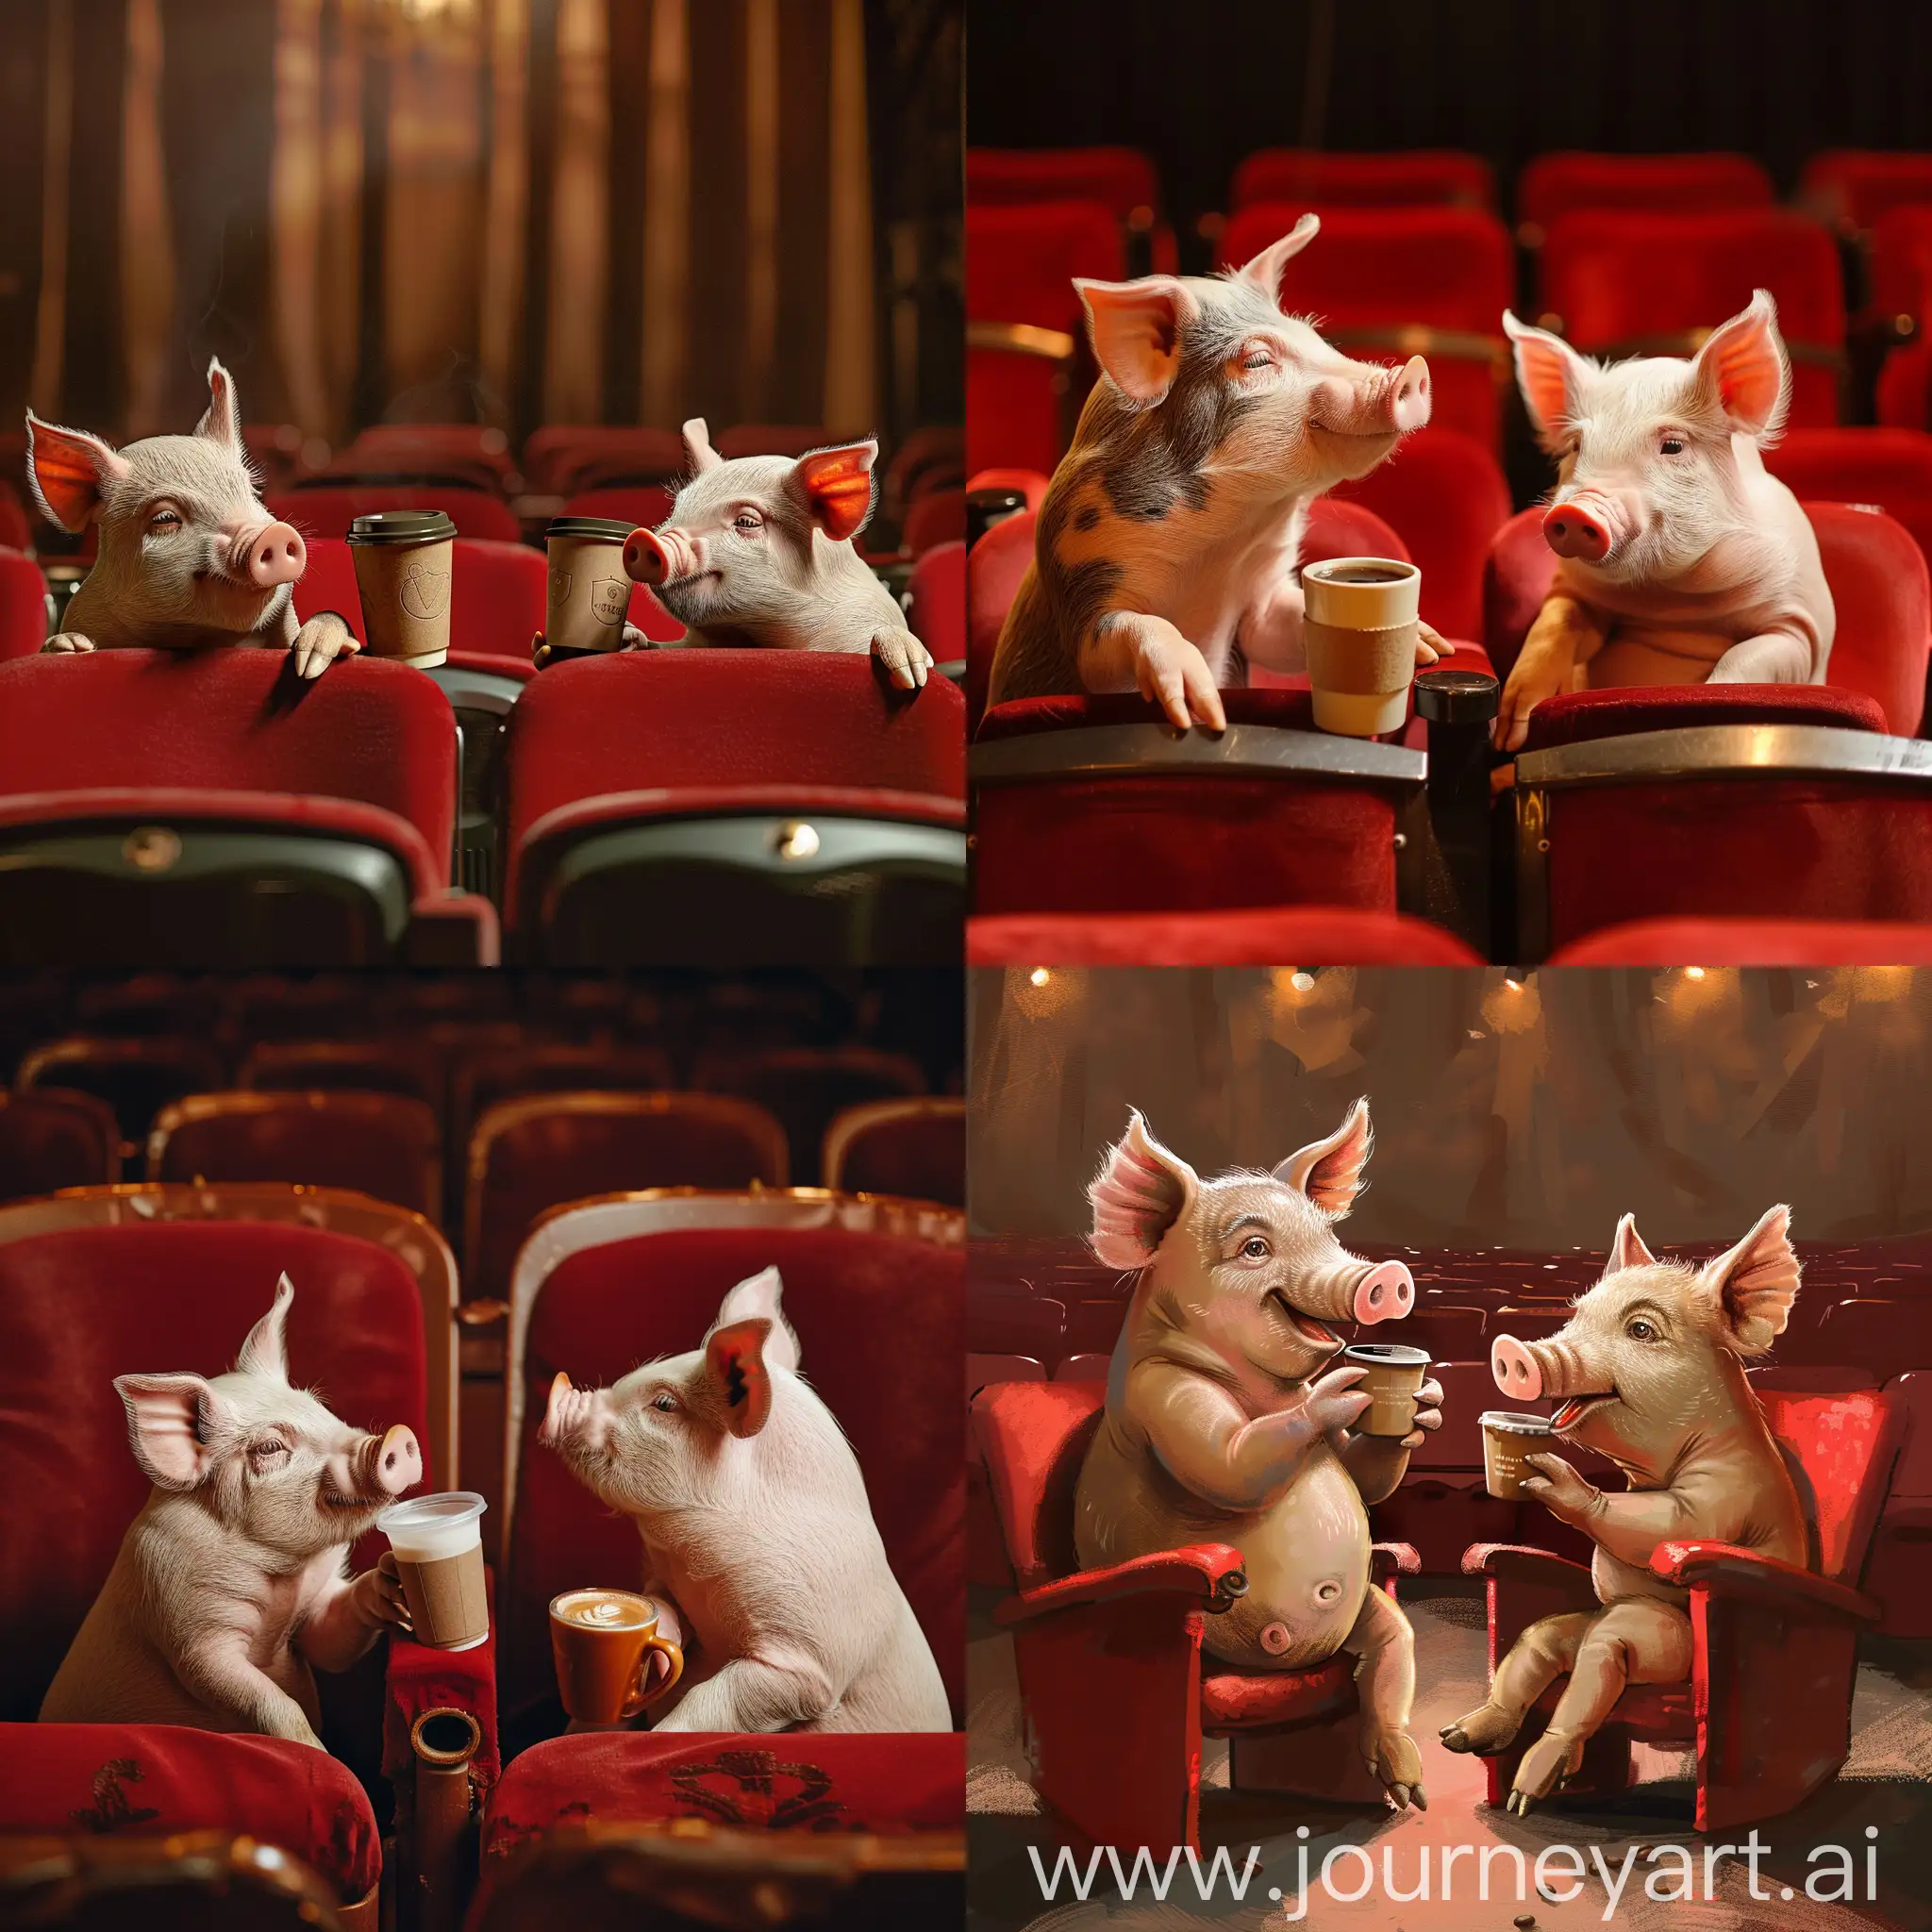 Pigs-Enjoying-Coffee-Date-in-Theater